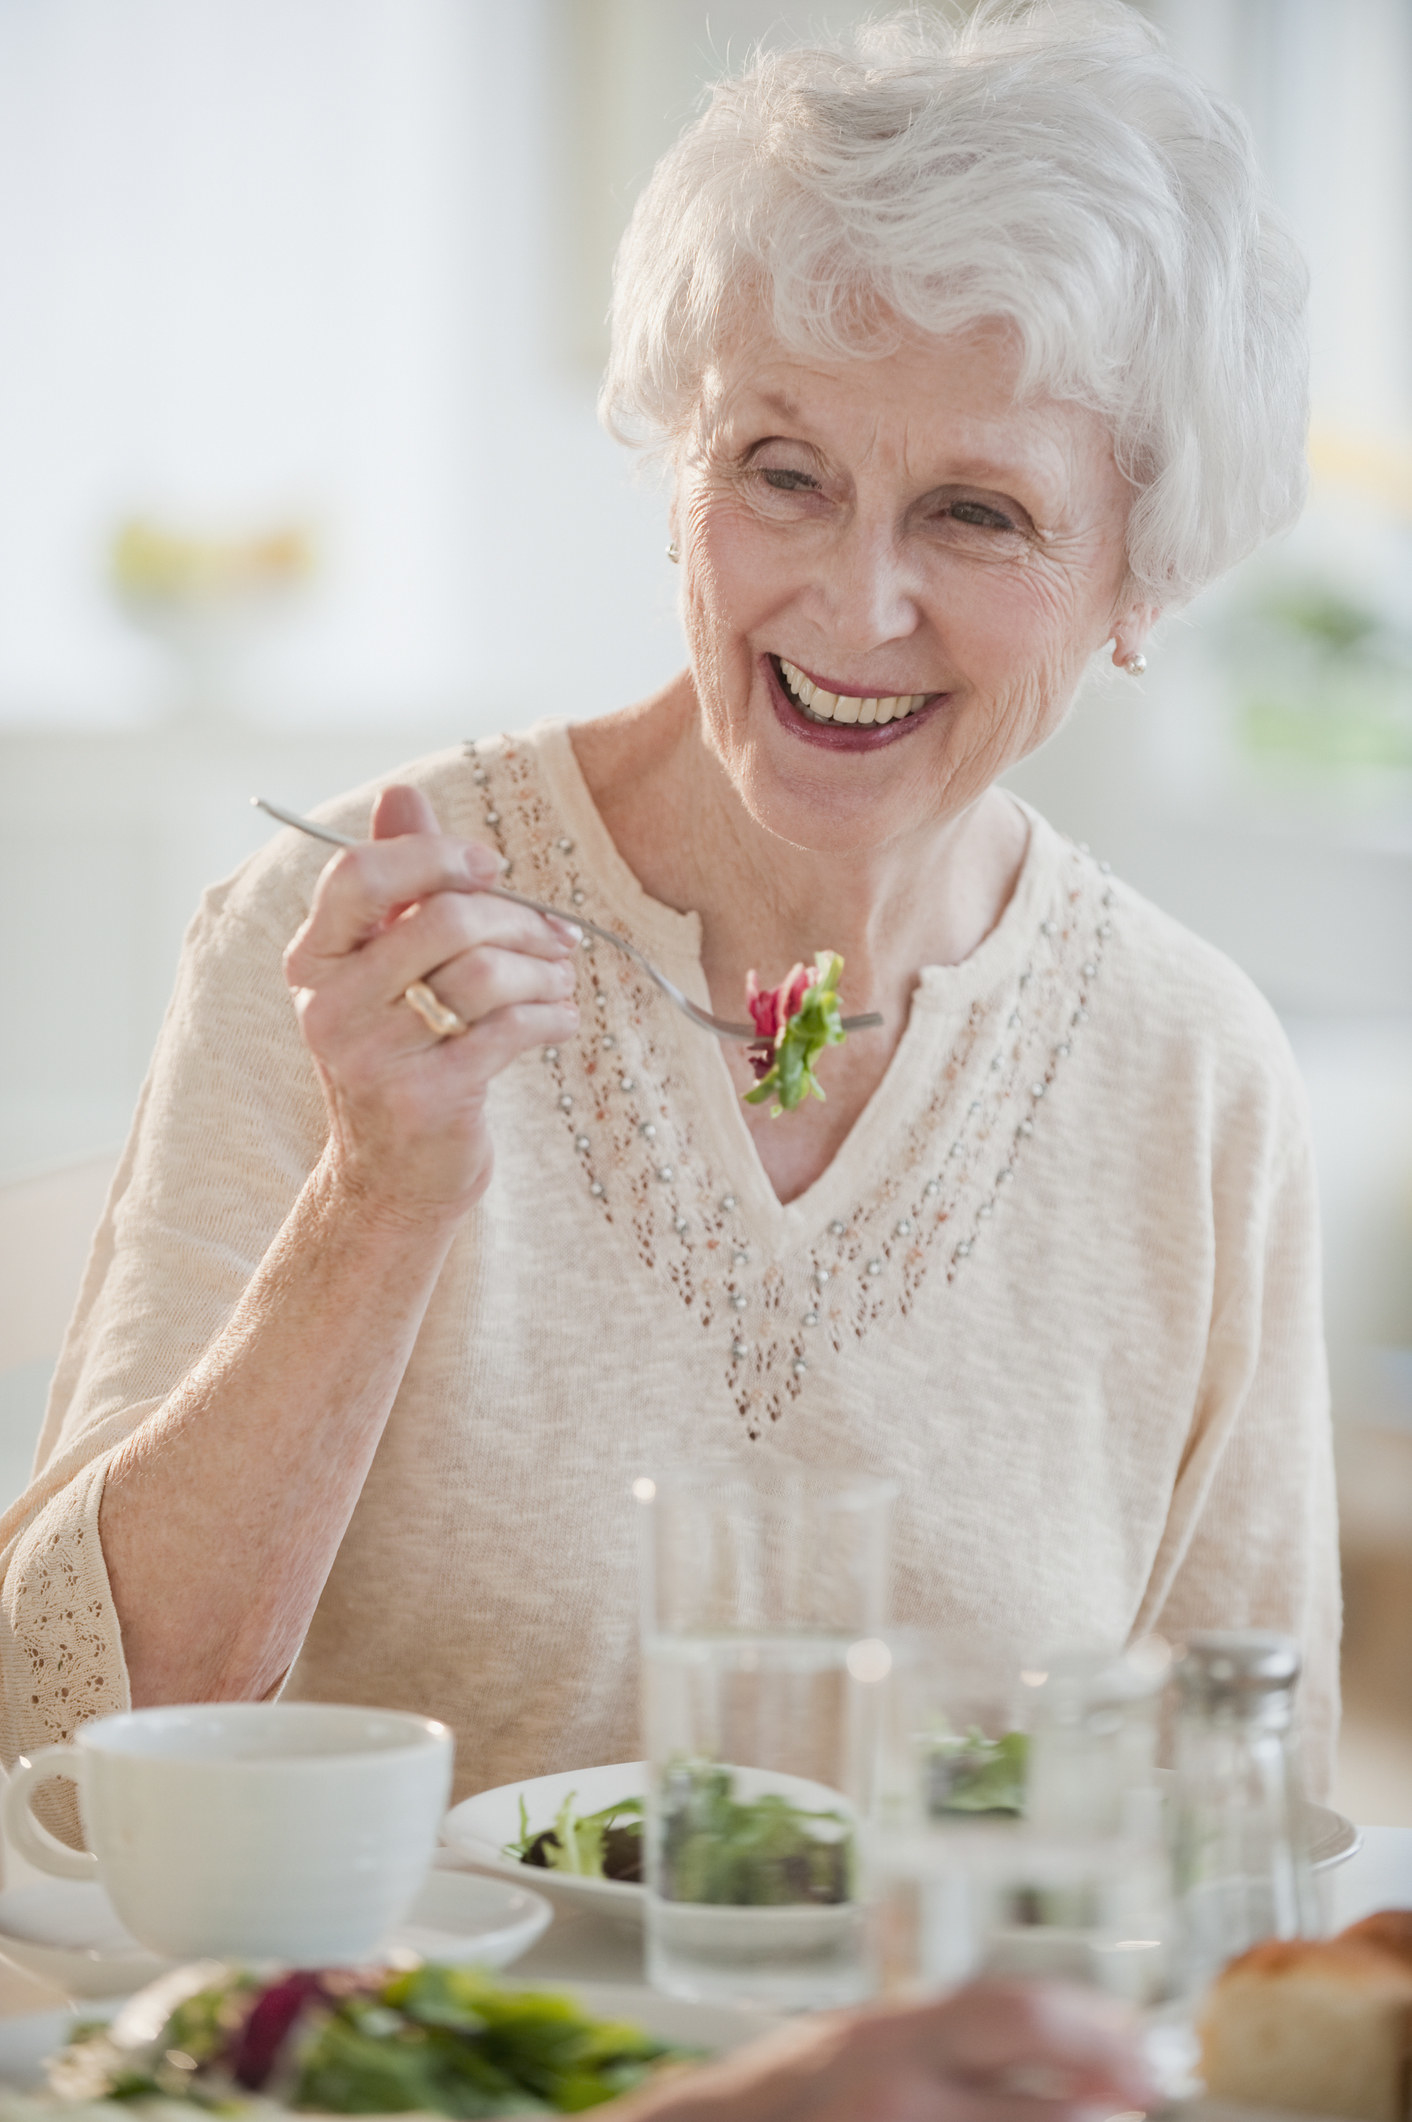 An older woman enjoying a salad